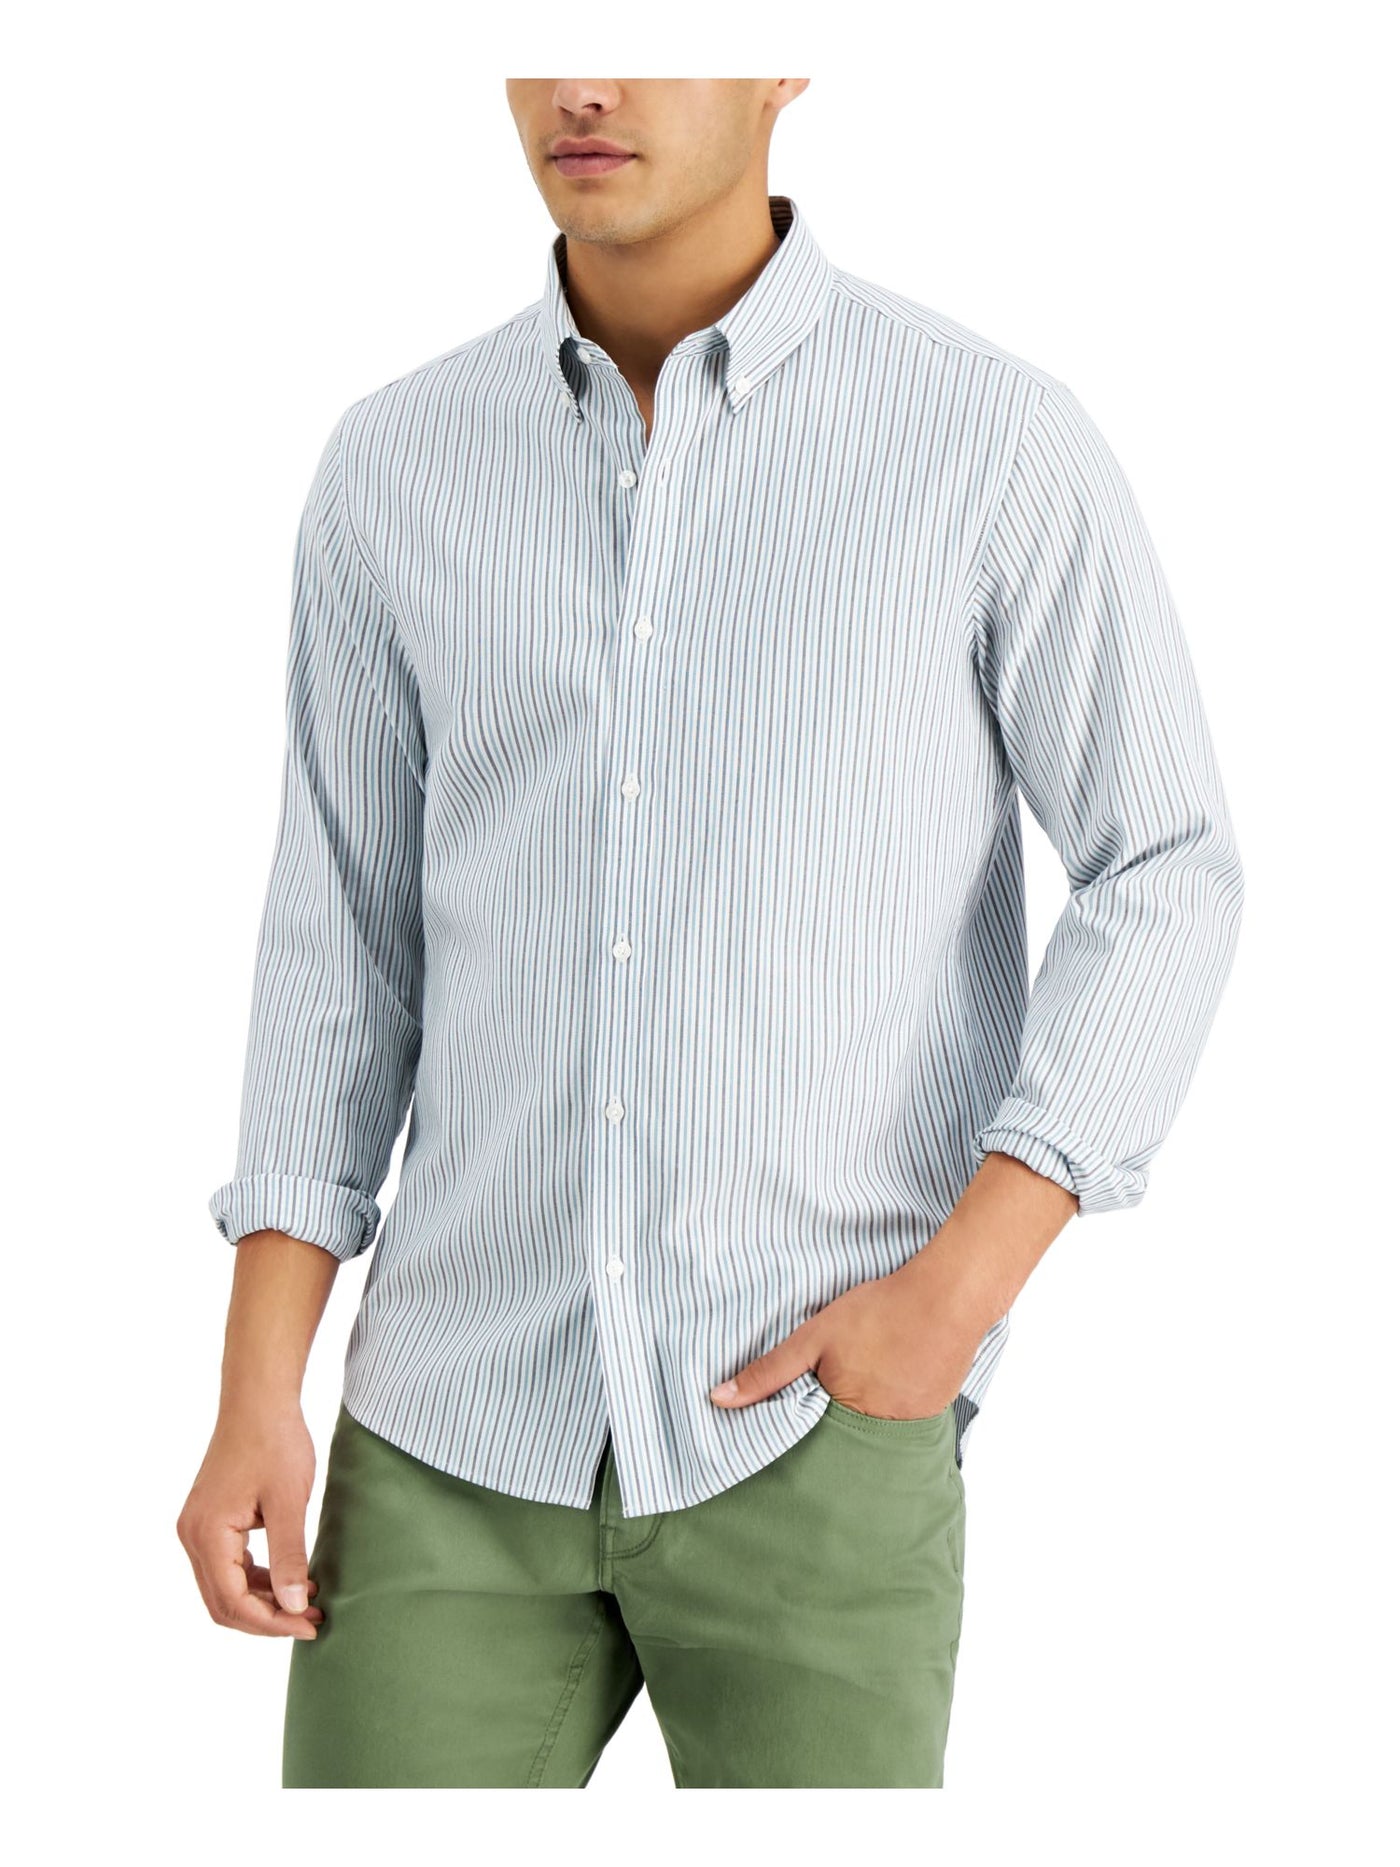 MICHAEL KORS Mens Green Pinstripe Collared Slim Fit Button Down Cotton Cotton Shirt S